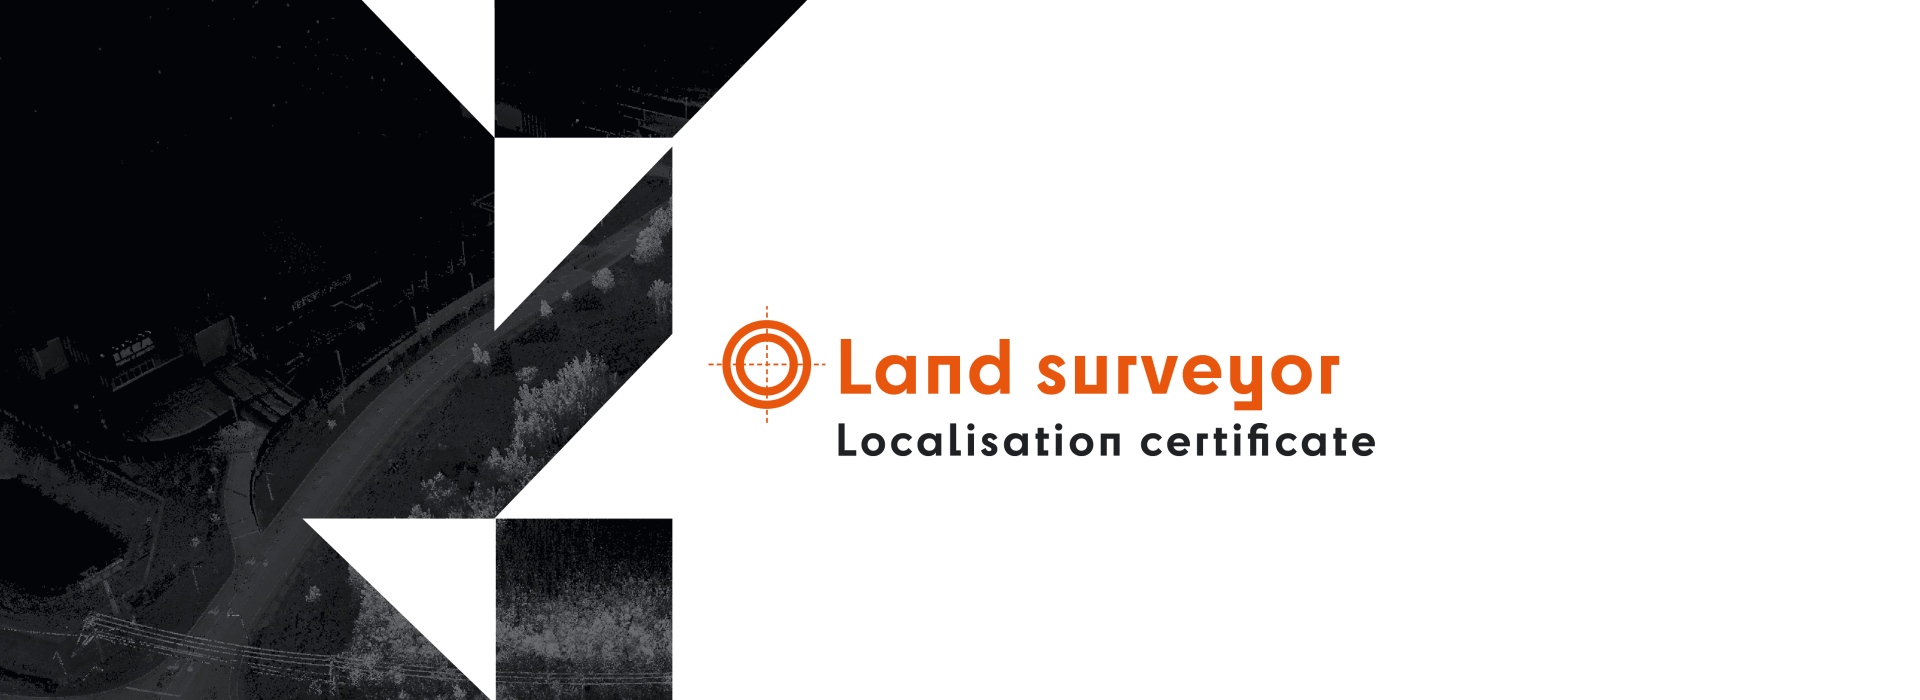 ANGLAIS_WebBanner_Land surveyor - Localisation certt